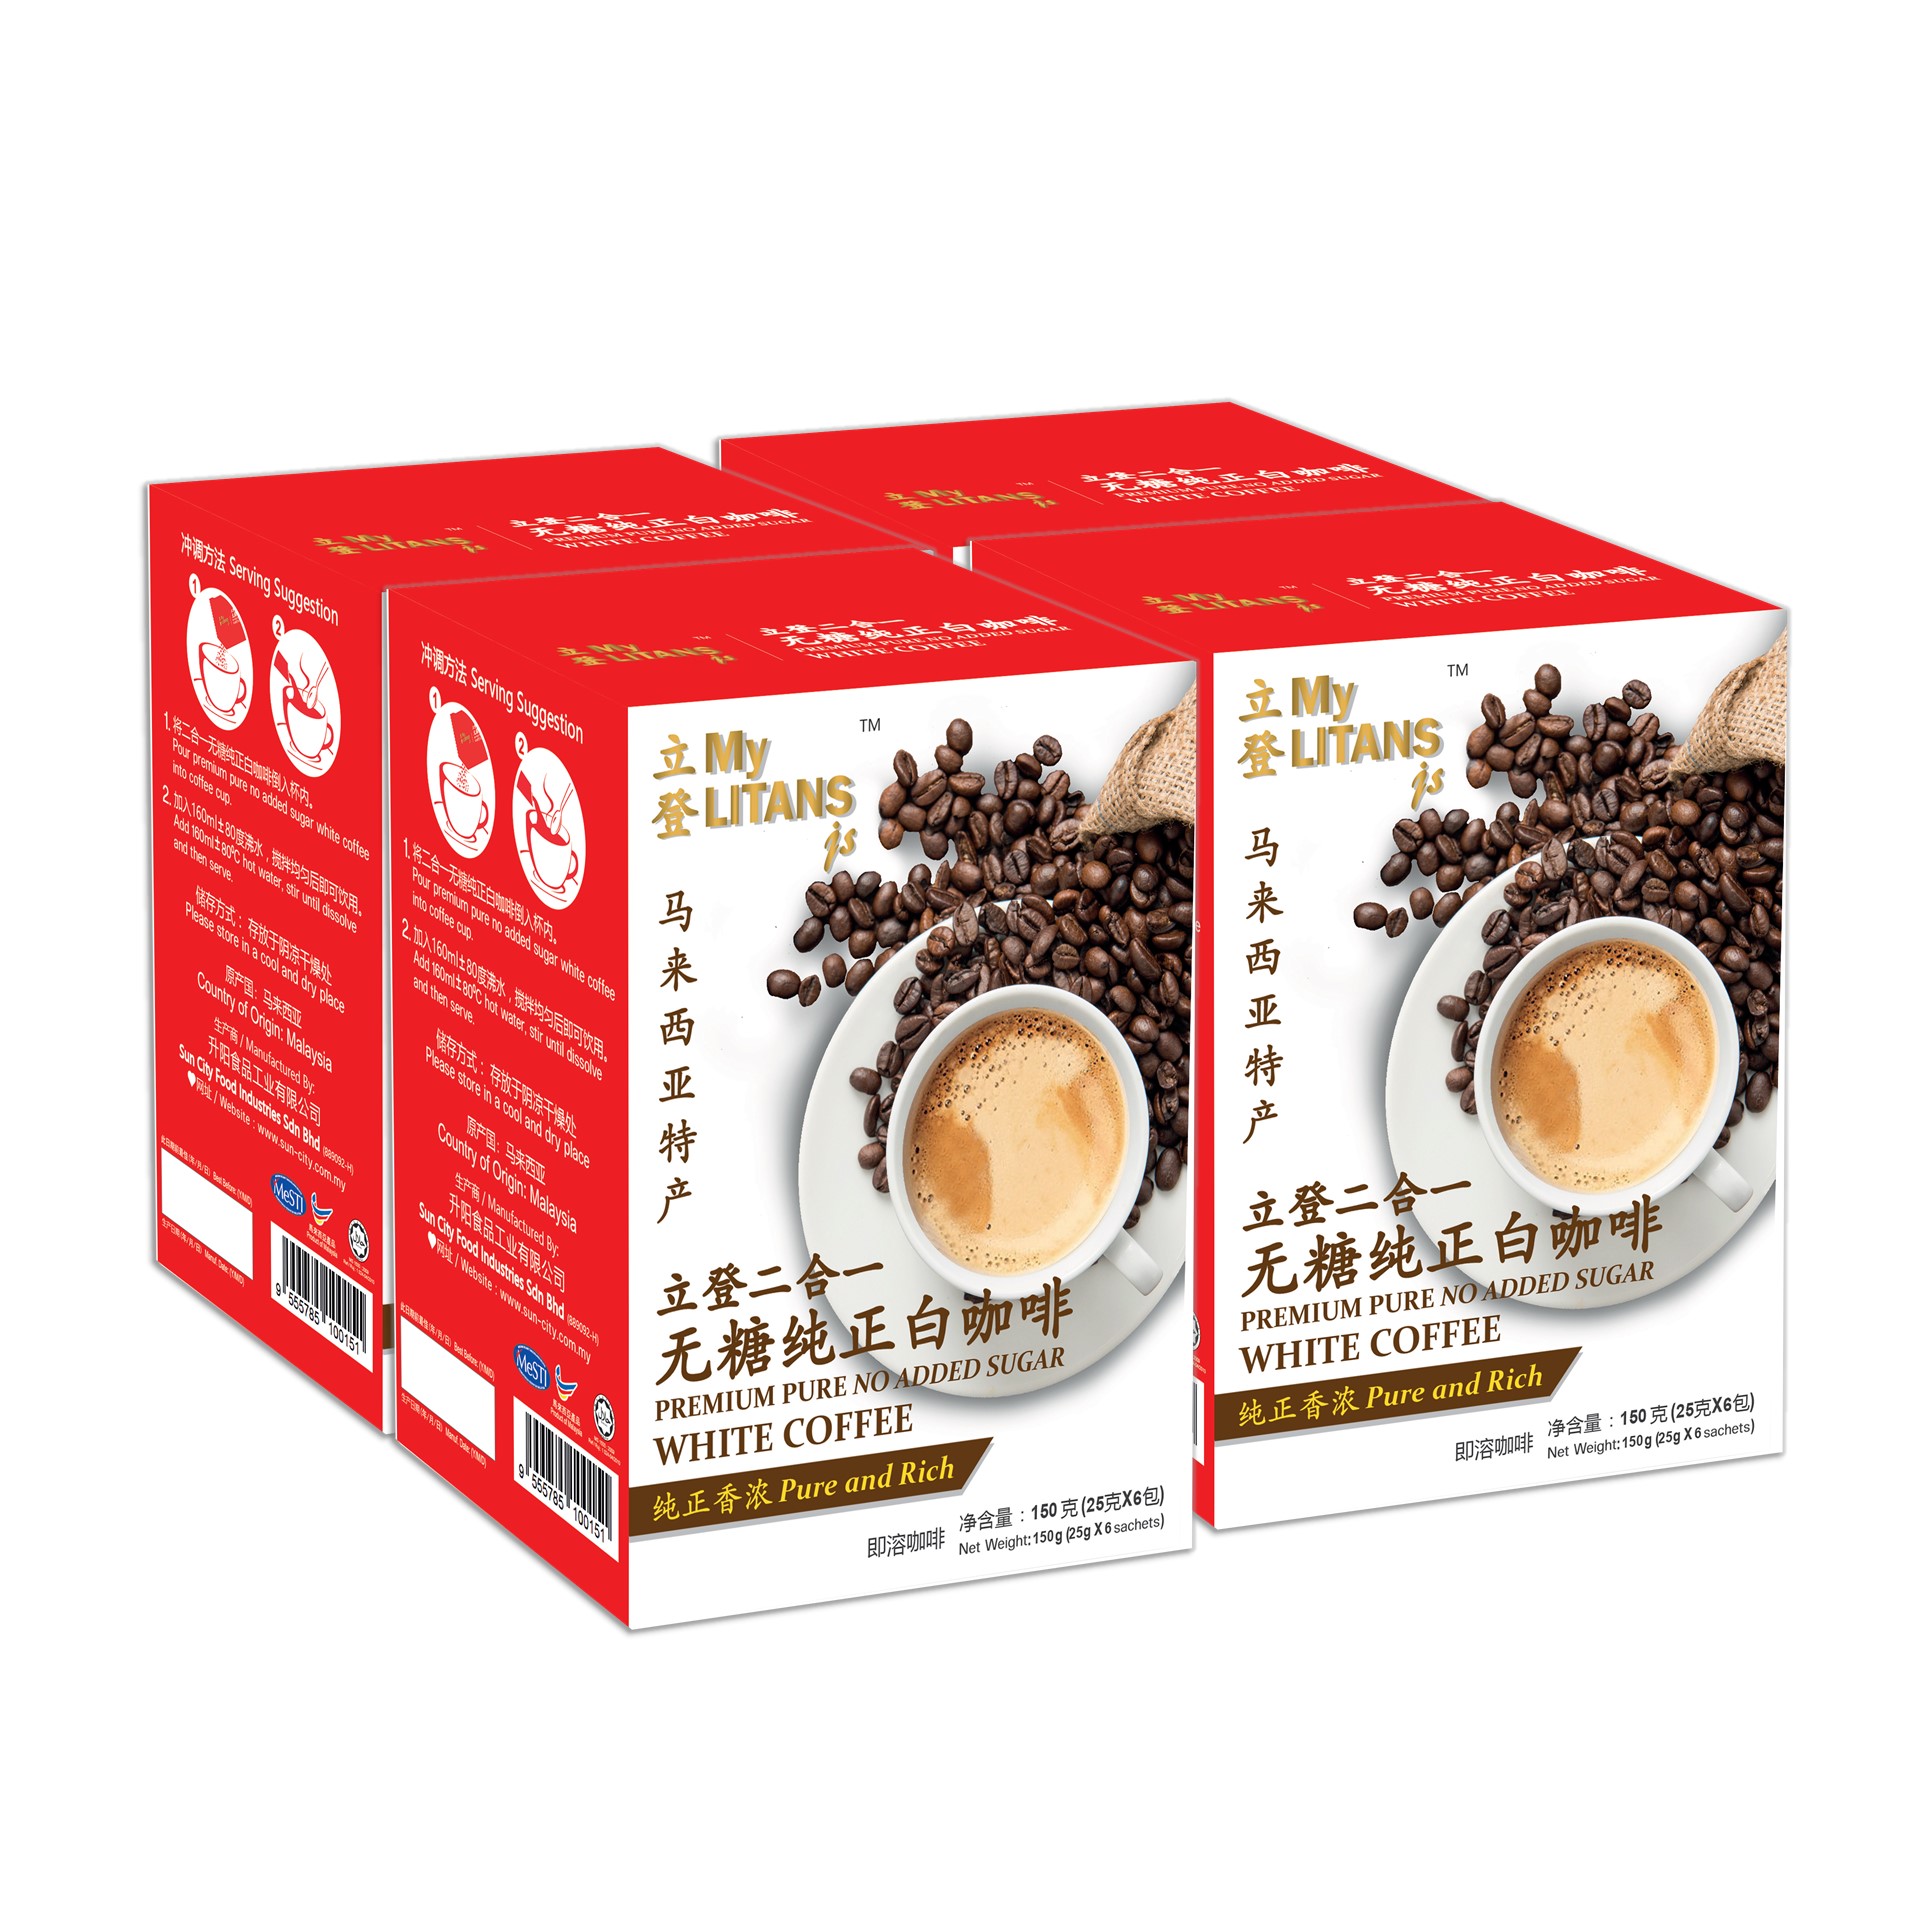 MyLITANSjs Premium Pure White Coffee No Added Sugar [4 box] (25 g x 6 sachets)